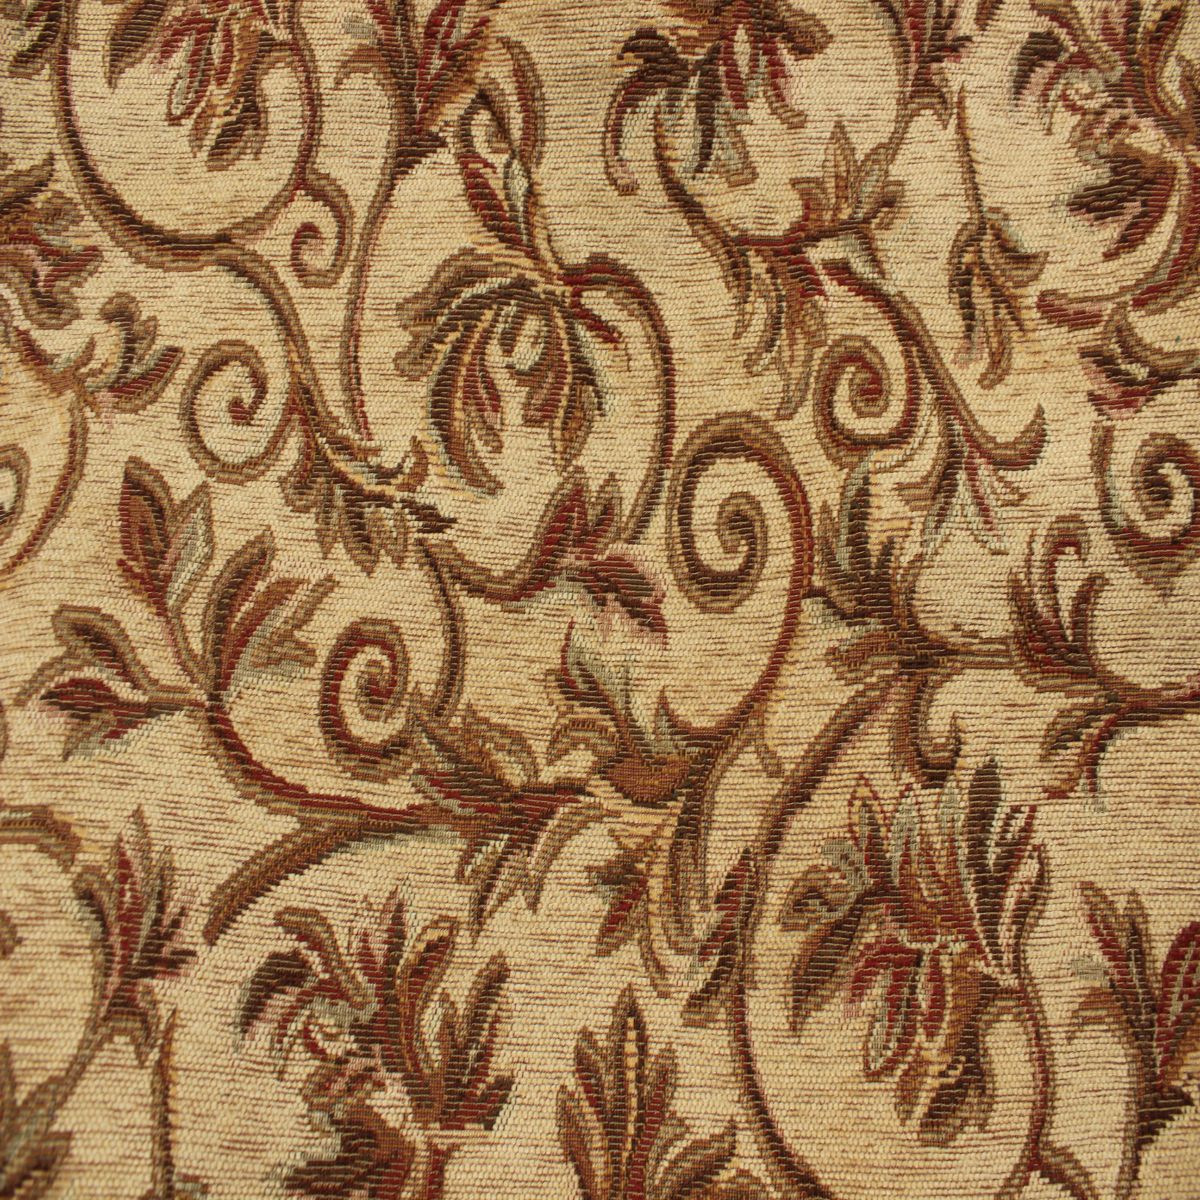 Antique Upholstery Fabric Ubicaciondepersonas Cdmx Gob Mx